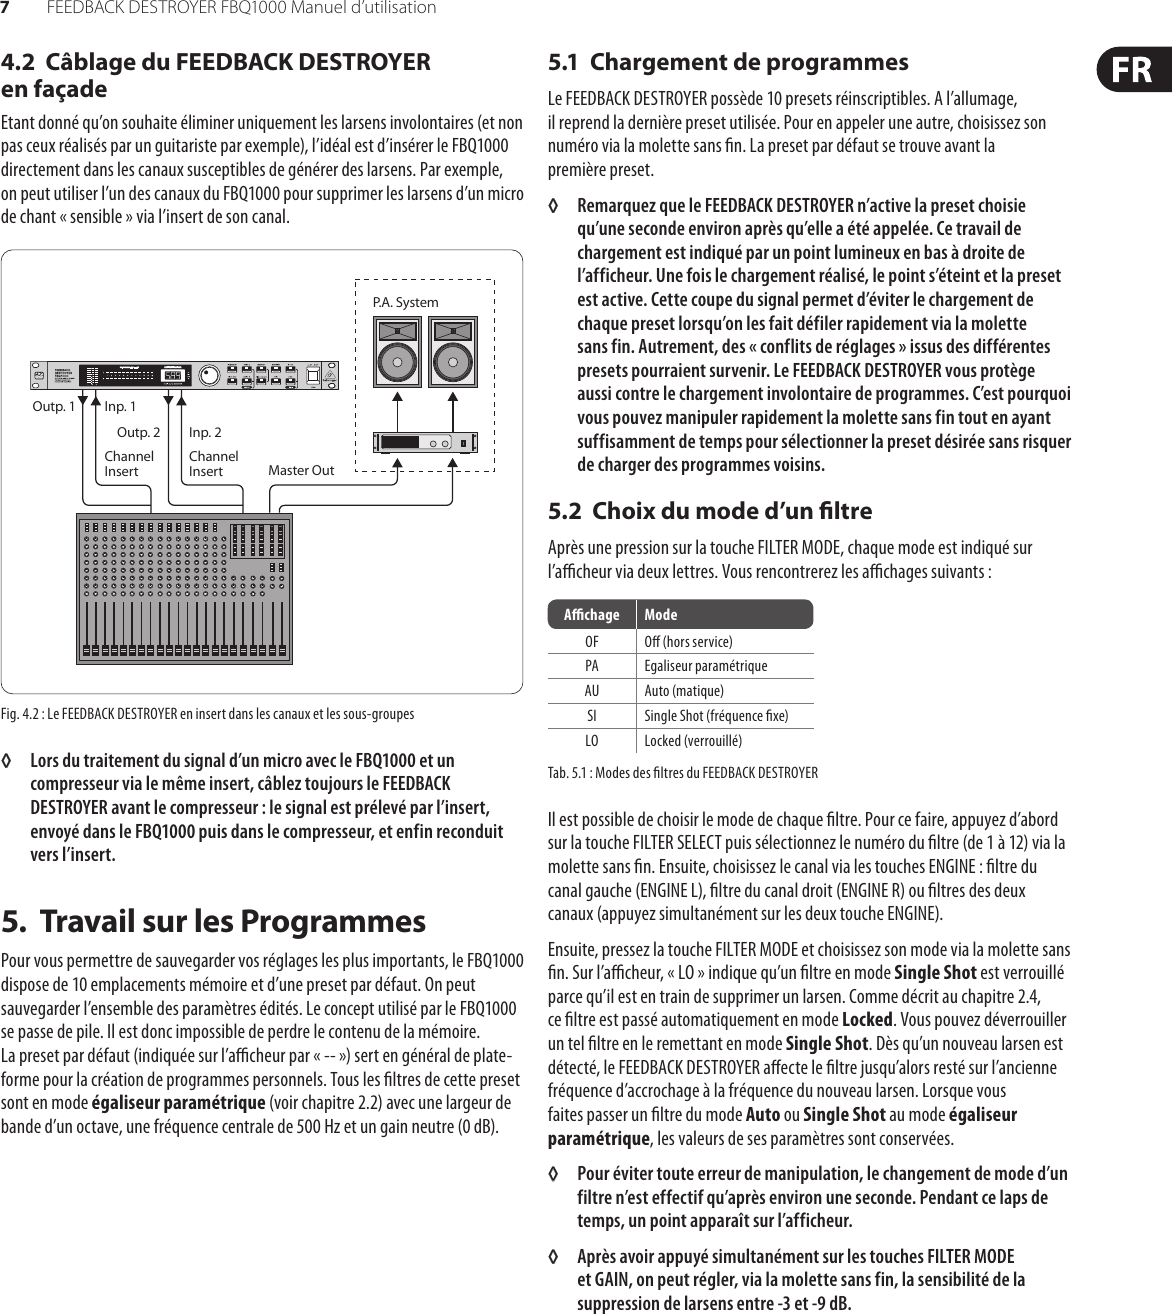 Page 7 of 12 - FEEDBACK DESTROYER FBQ1000 Behringer User Manual (French) P0A3R M FR